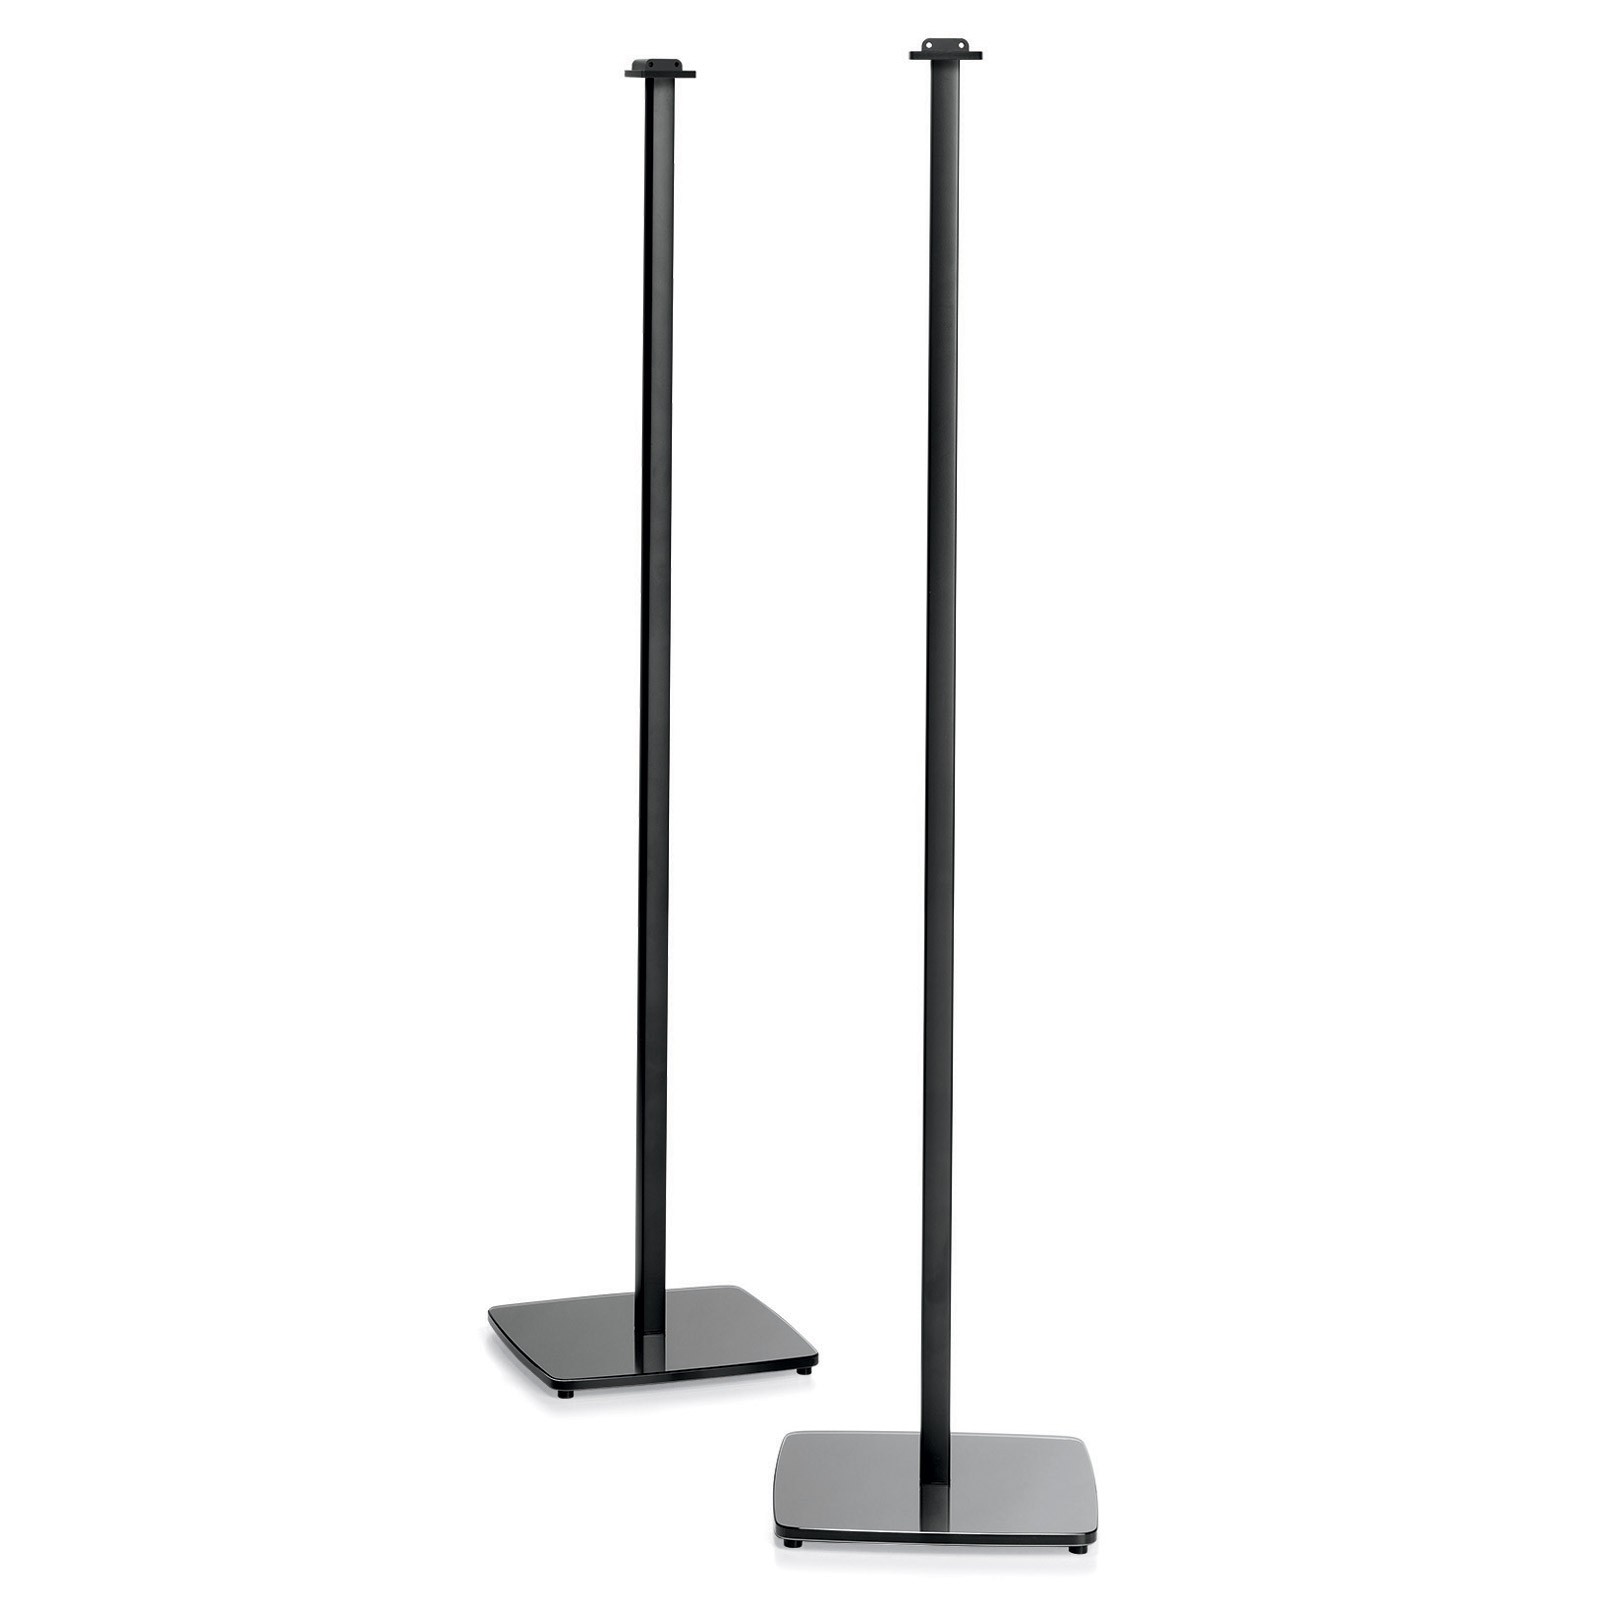 Bose omnijewel floor stand black speaker stands pair